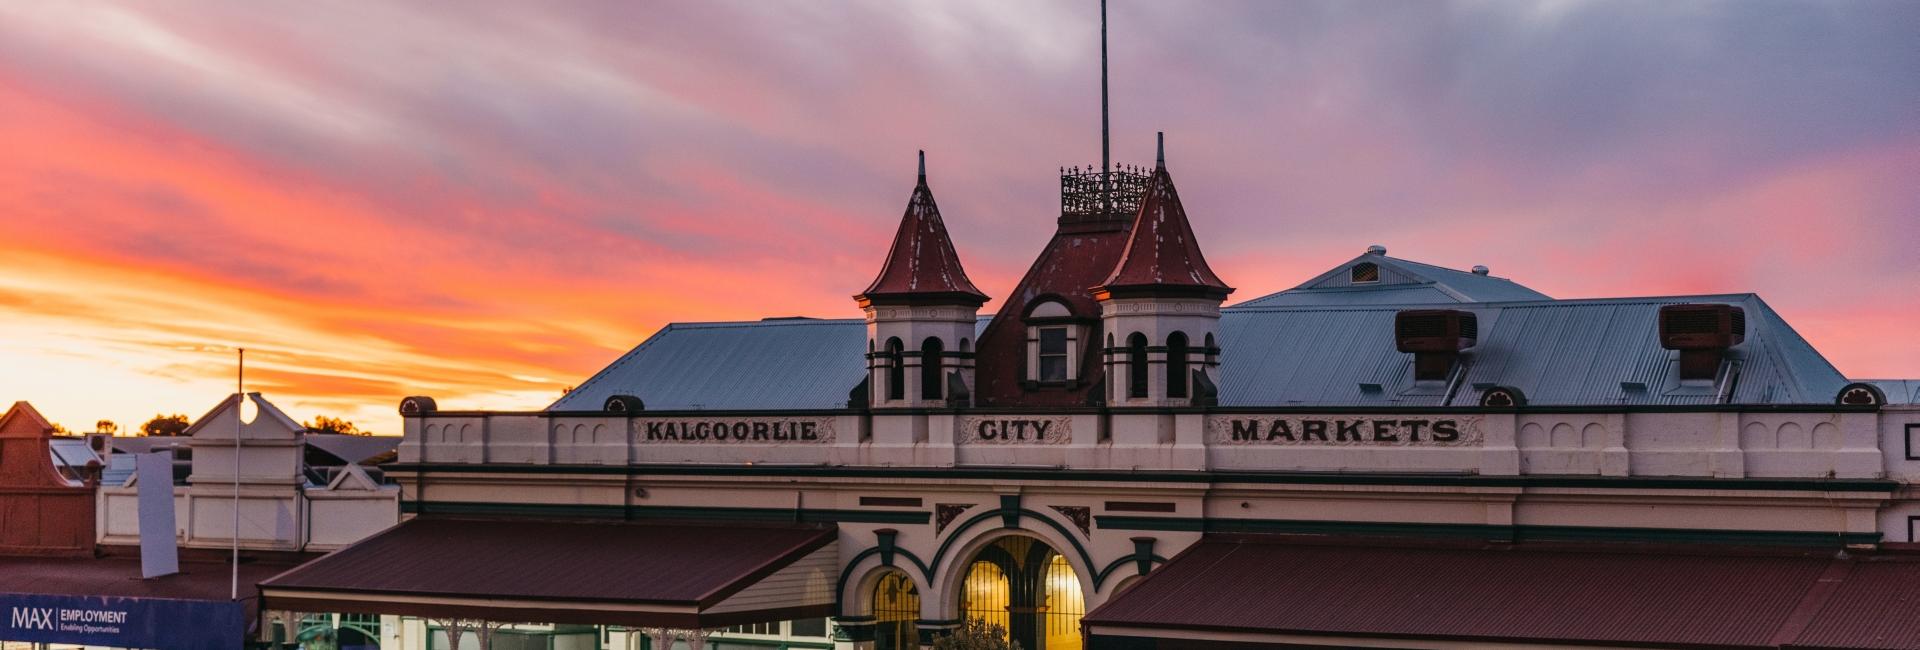 Kalgoorlie Town [Image by Jarrad Seng]-jumbotron